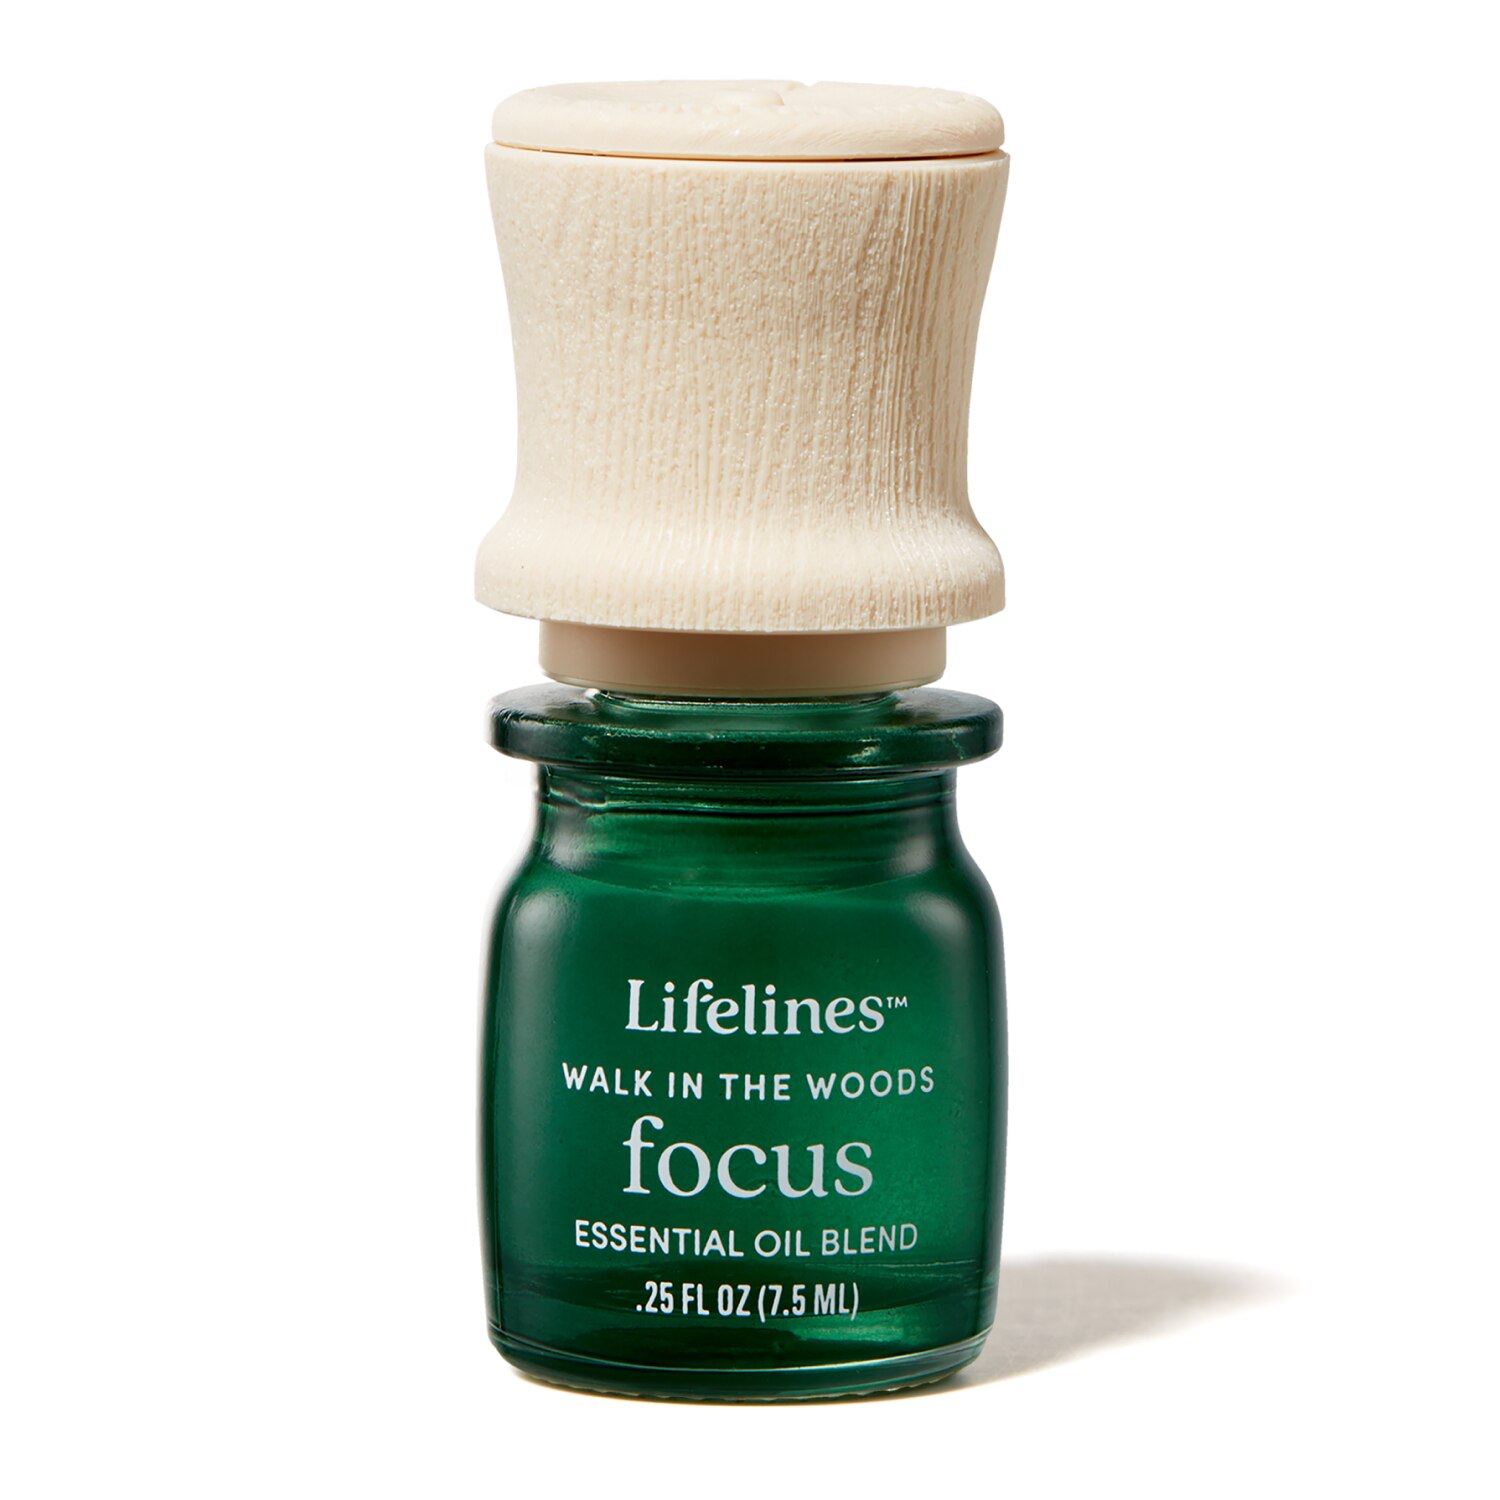 Lifelines Essential Oil Blend 7.5ml-Focus